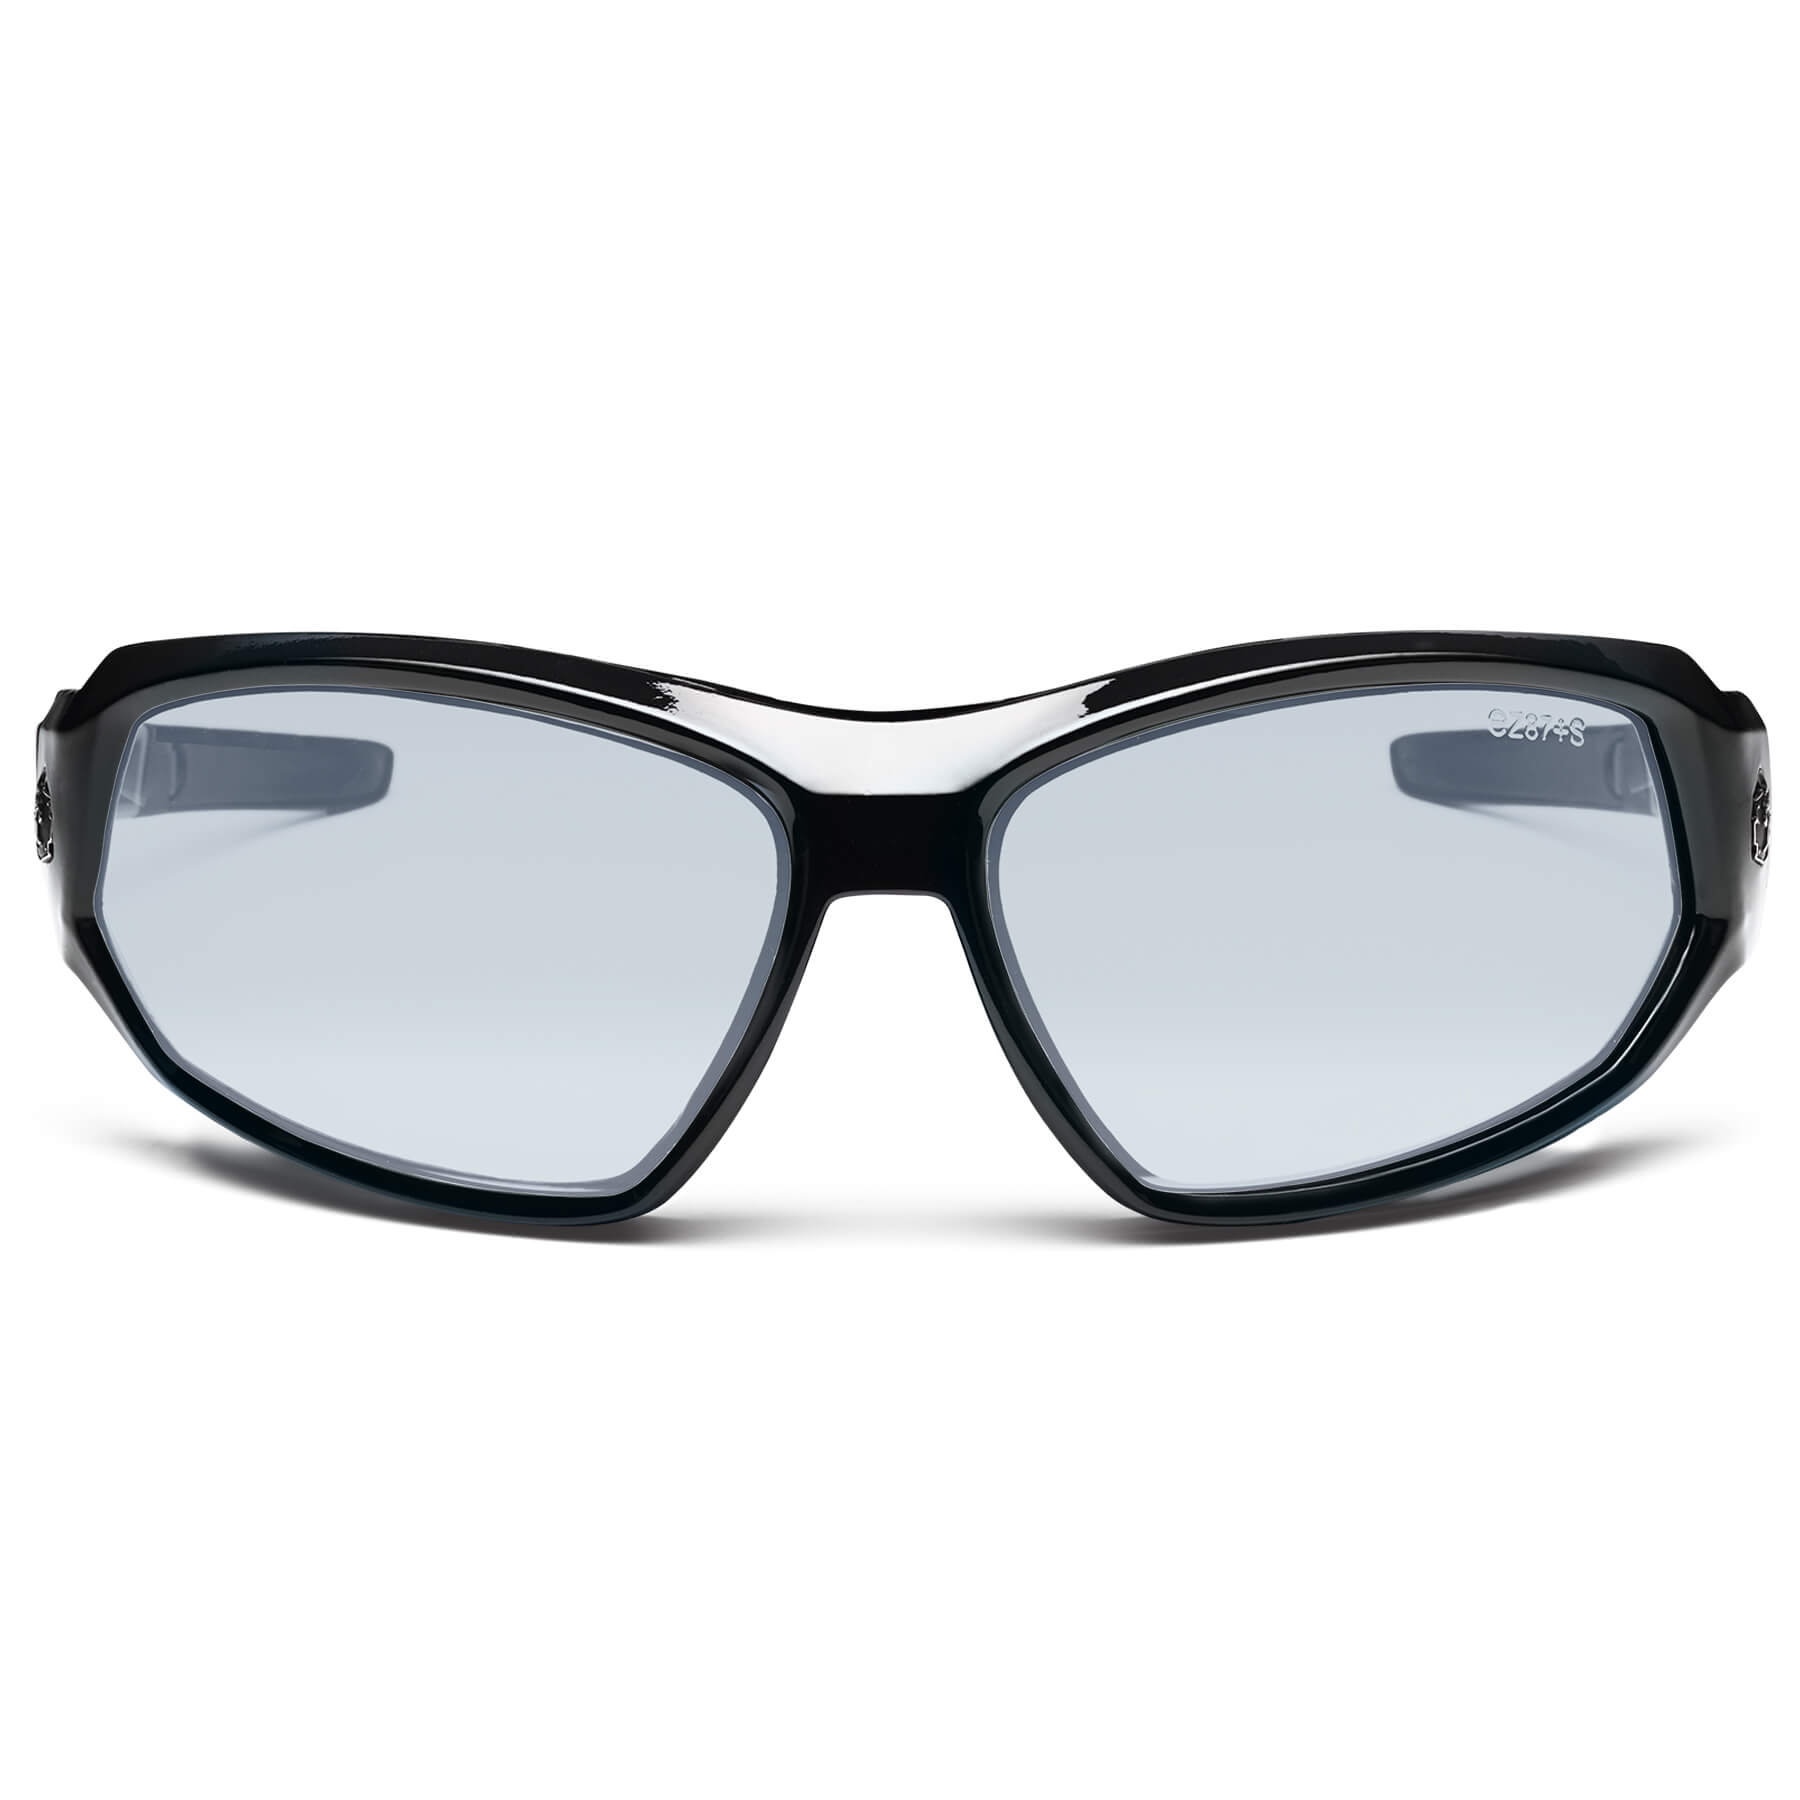 Ergodyne SkullerzÂ® Loki Safety Glasses // Sunglasses, Black, Anti-Fog In/Outdoor Lens - image 5 of 6